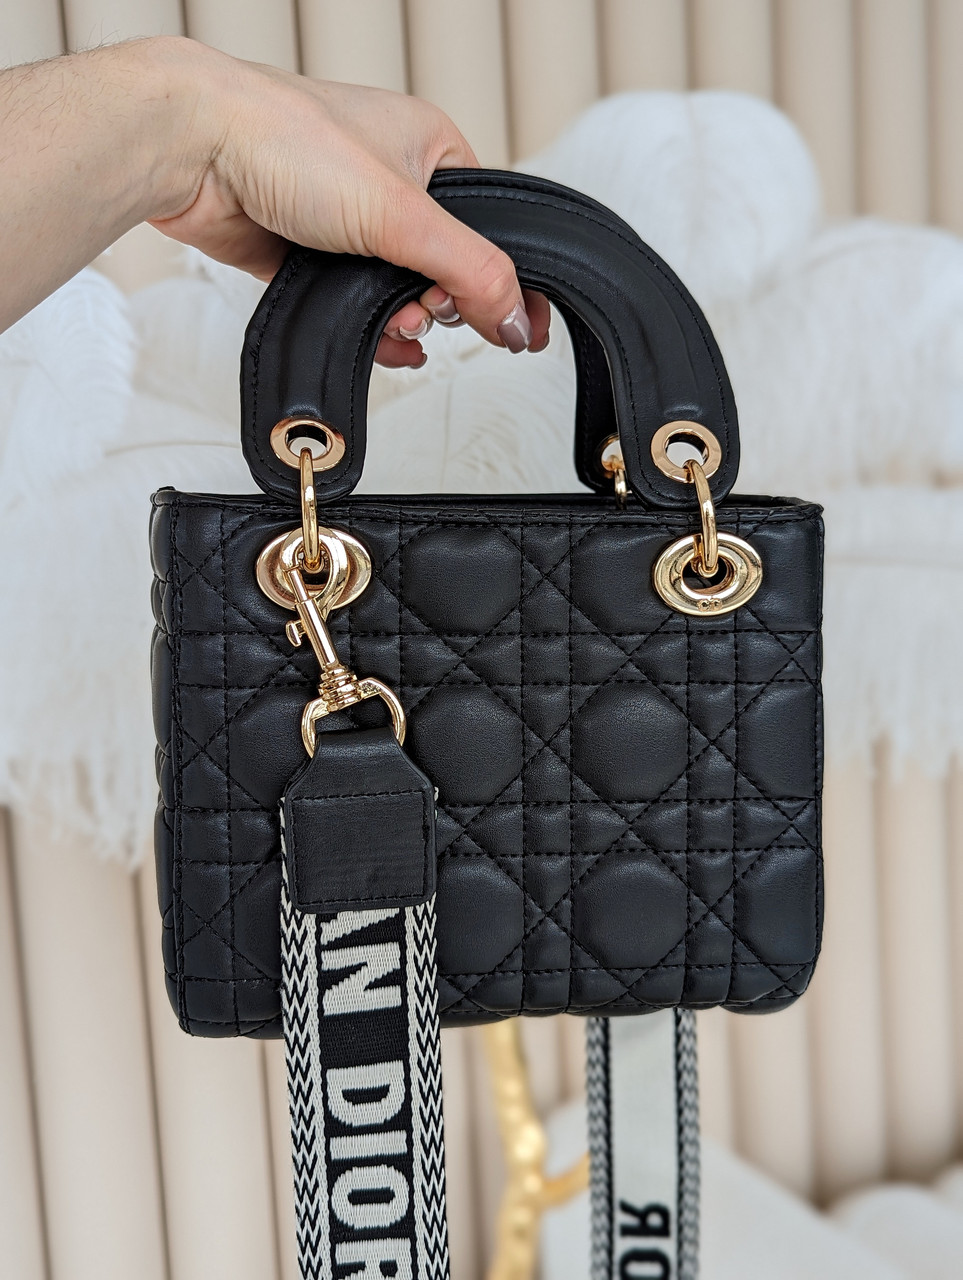 Сумка Леди Диор мини, черная сумочка на широком ремне Кристиан Диор